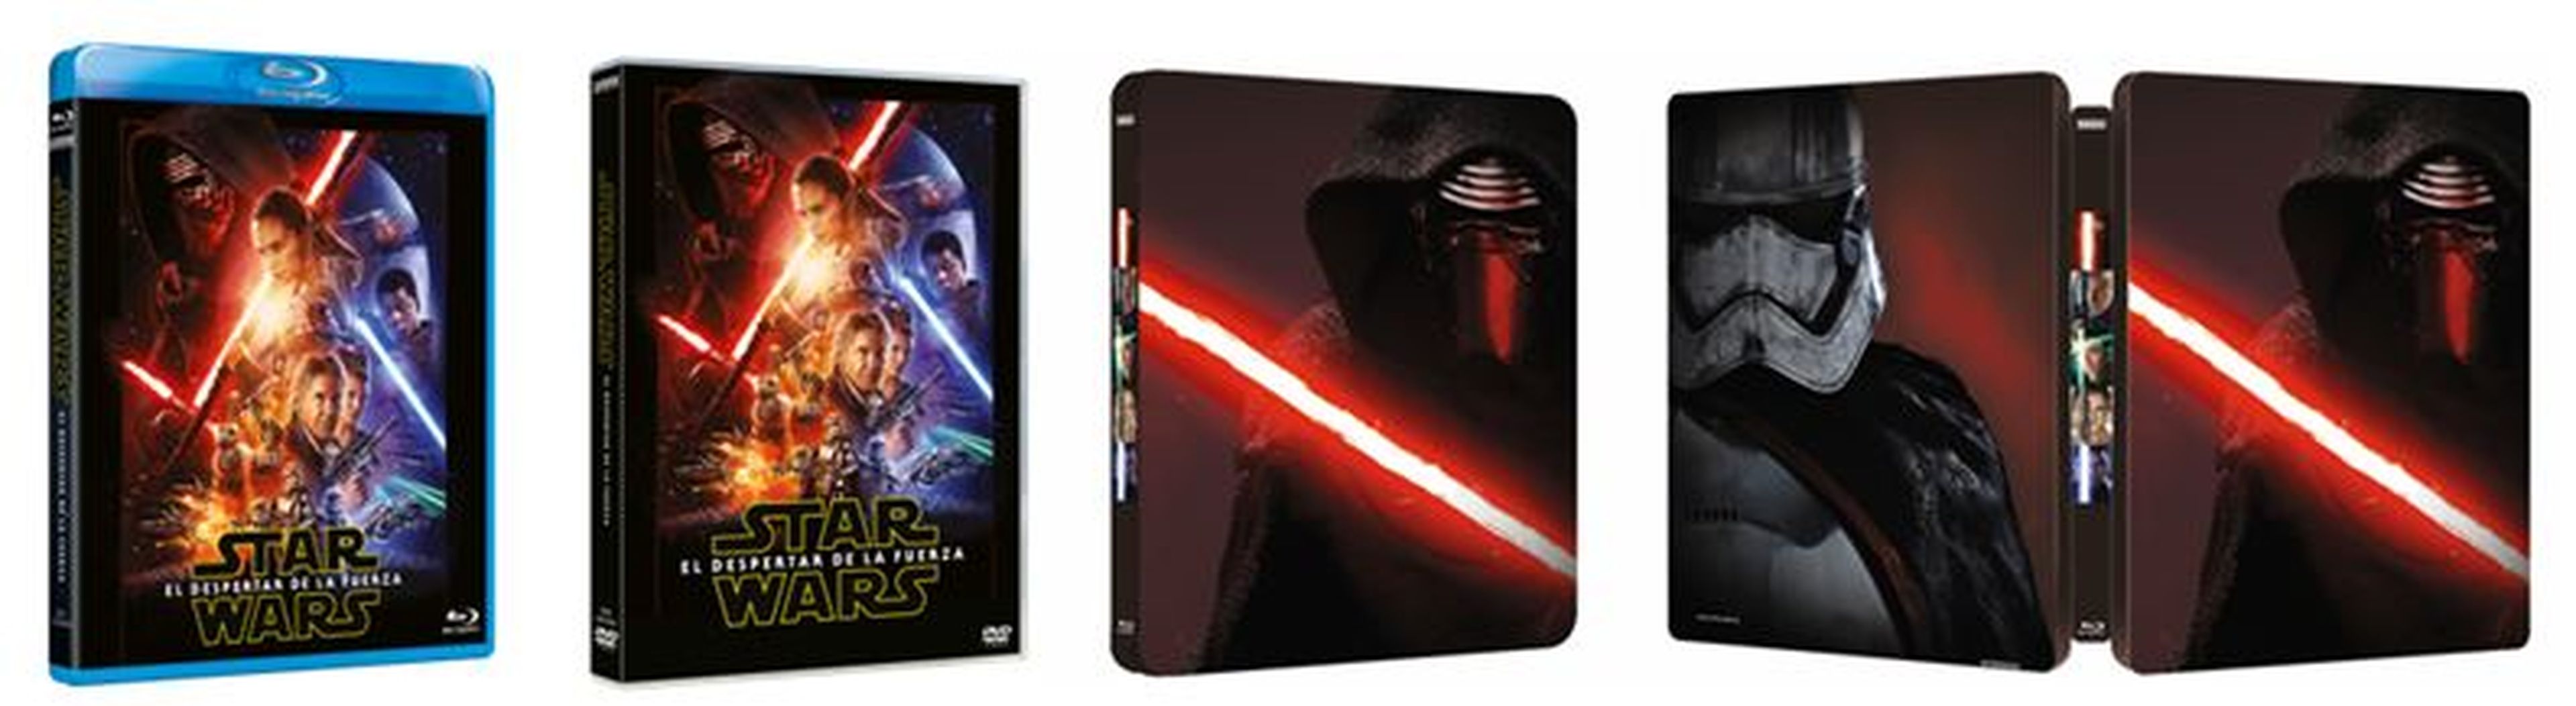 Blu Ray Star Wars: Episode Vii The Force Awakens Steelbook - Star Wars: El  Despertar de La Fuerza